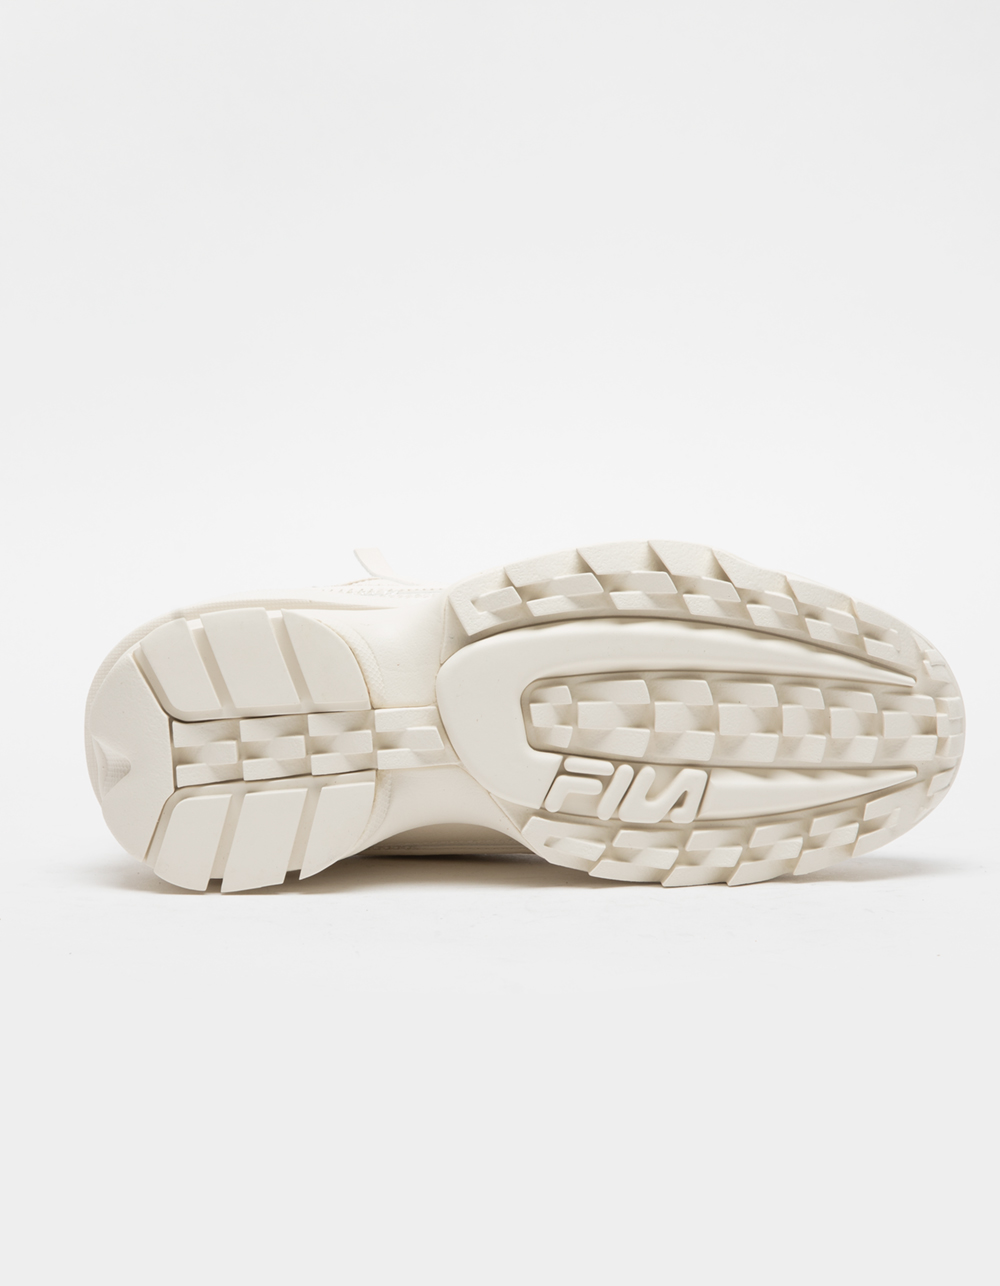 FILA - Women's Disruptor 2 Exp Shoes (5XM01544 664)